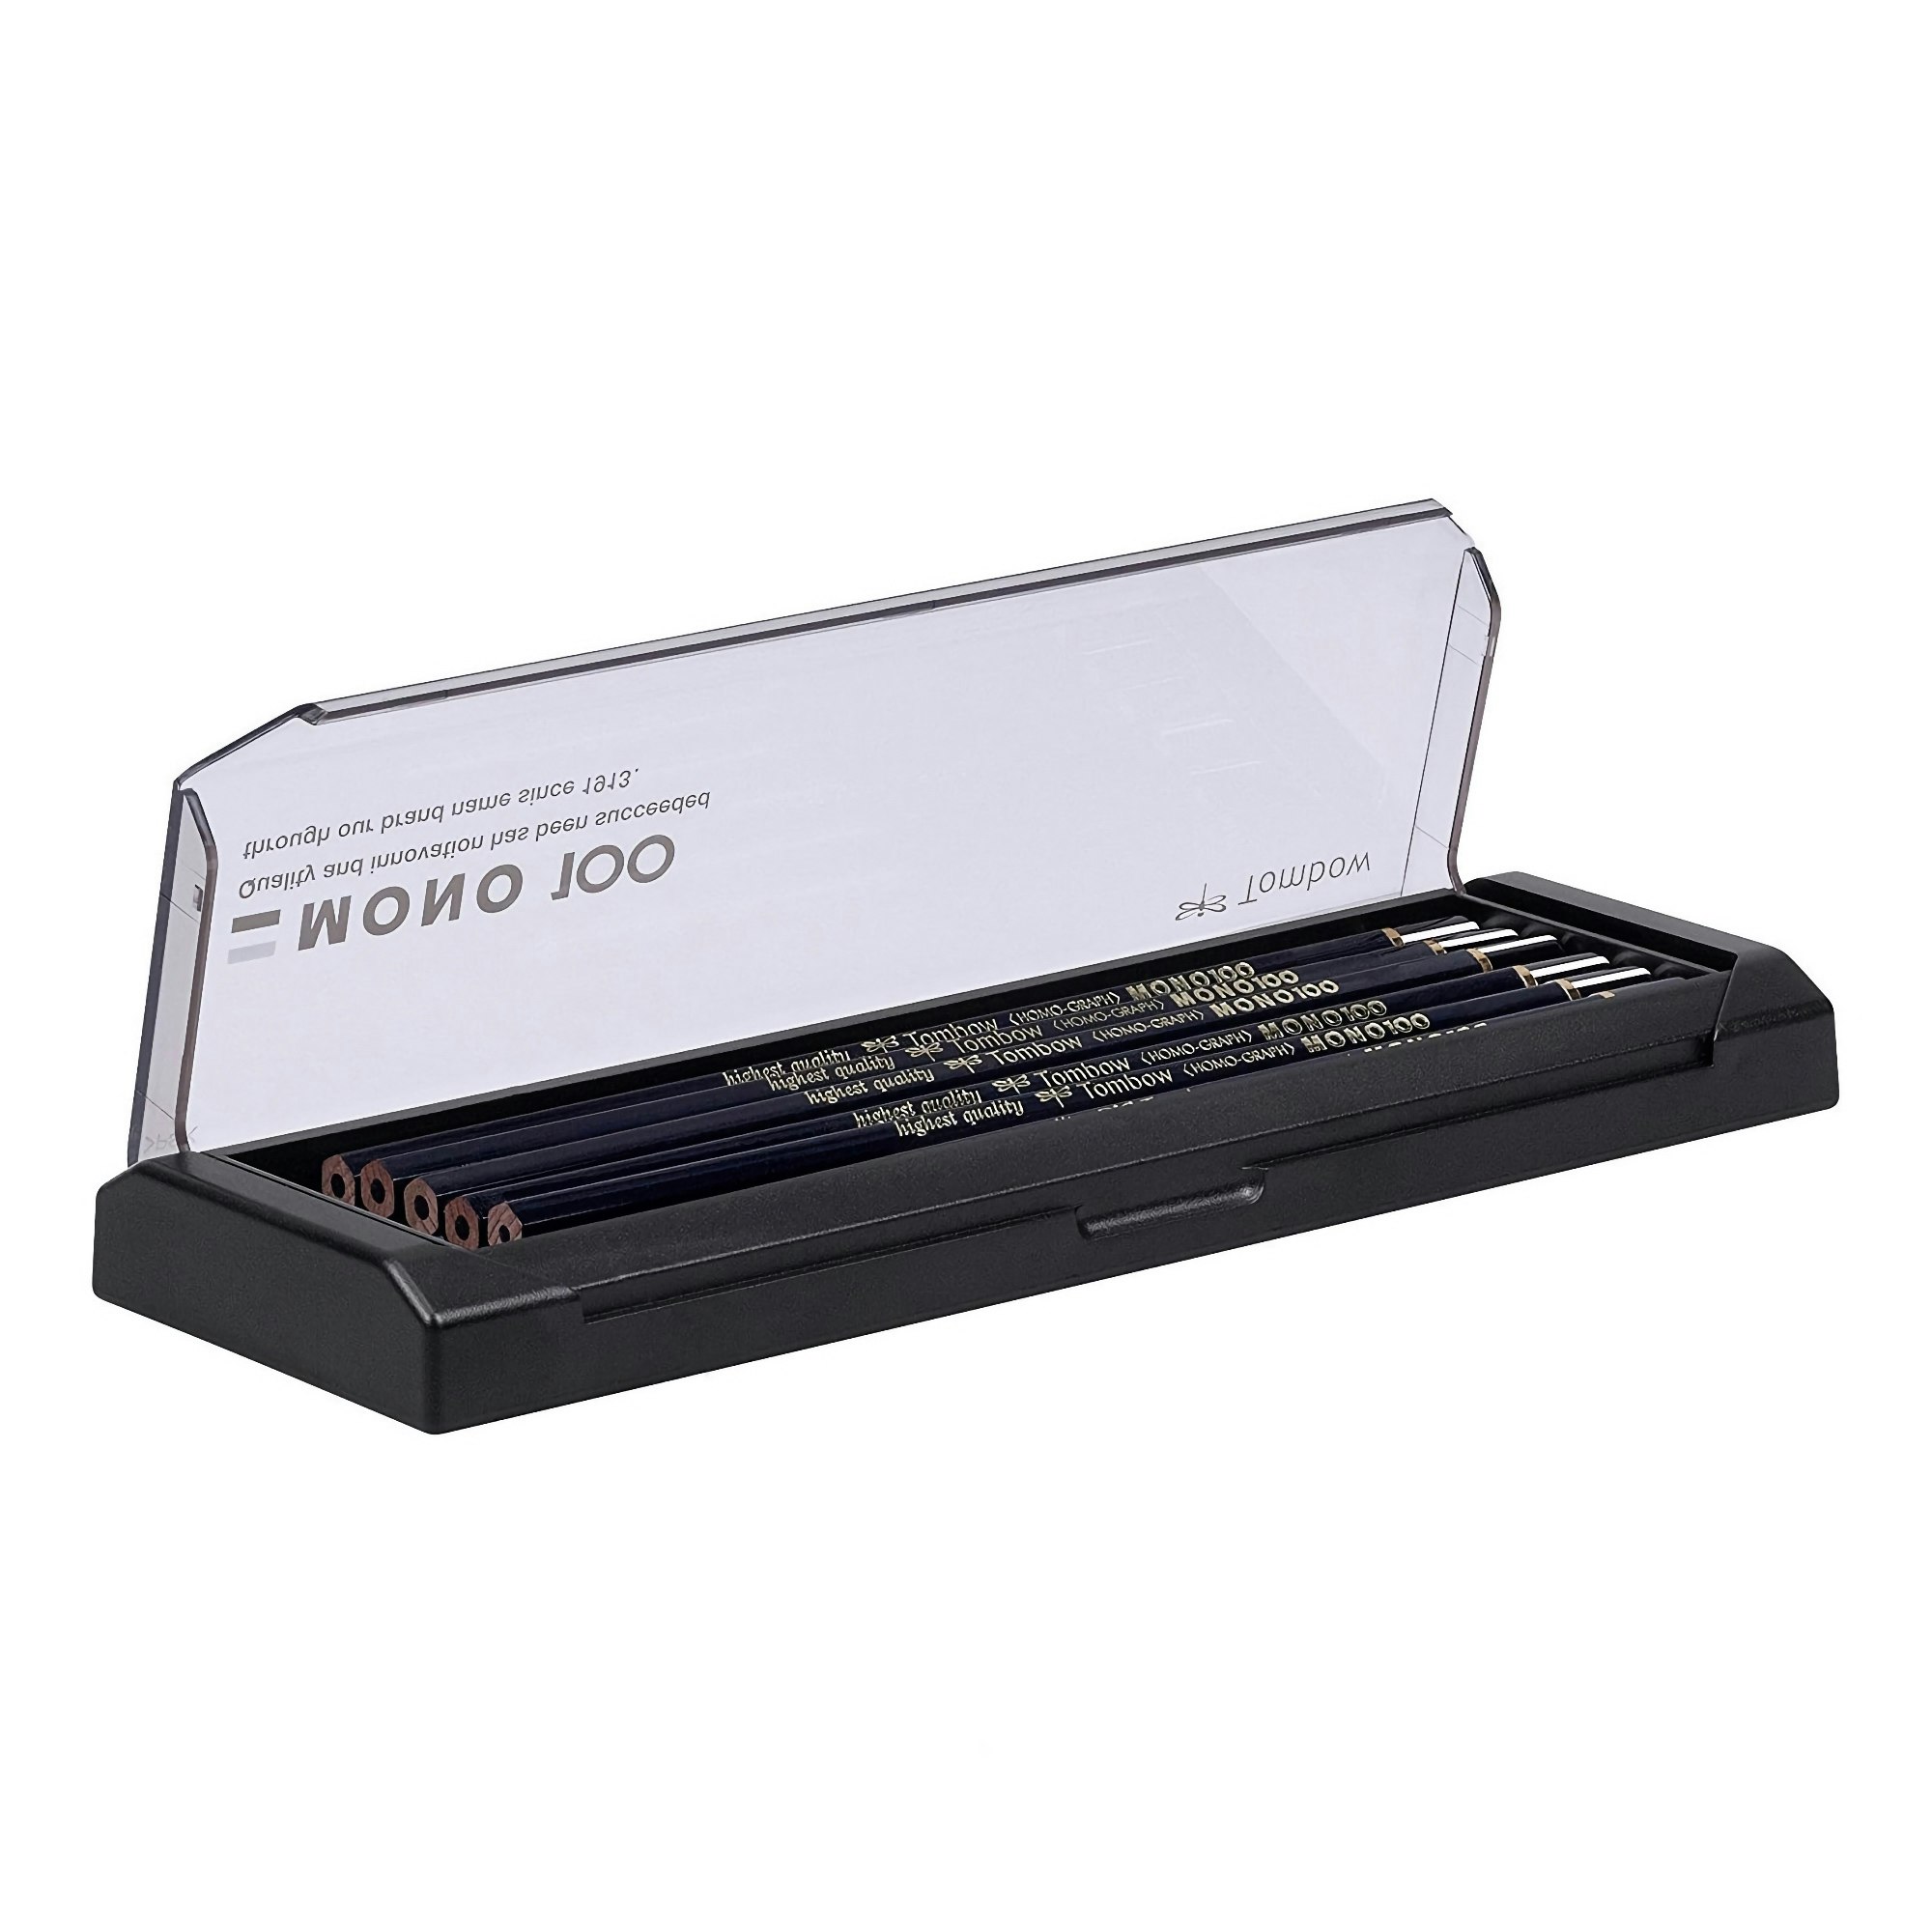 Tombow Mono 100 Pencil – HB – set of 12